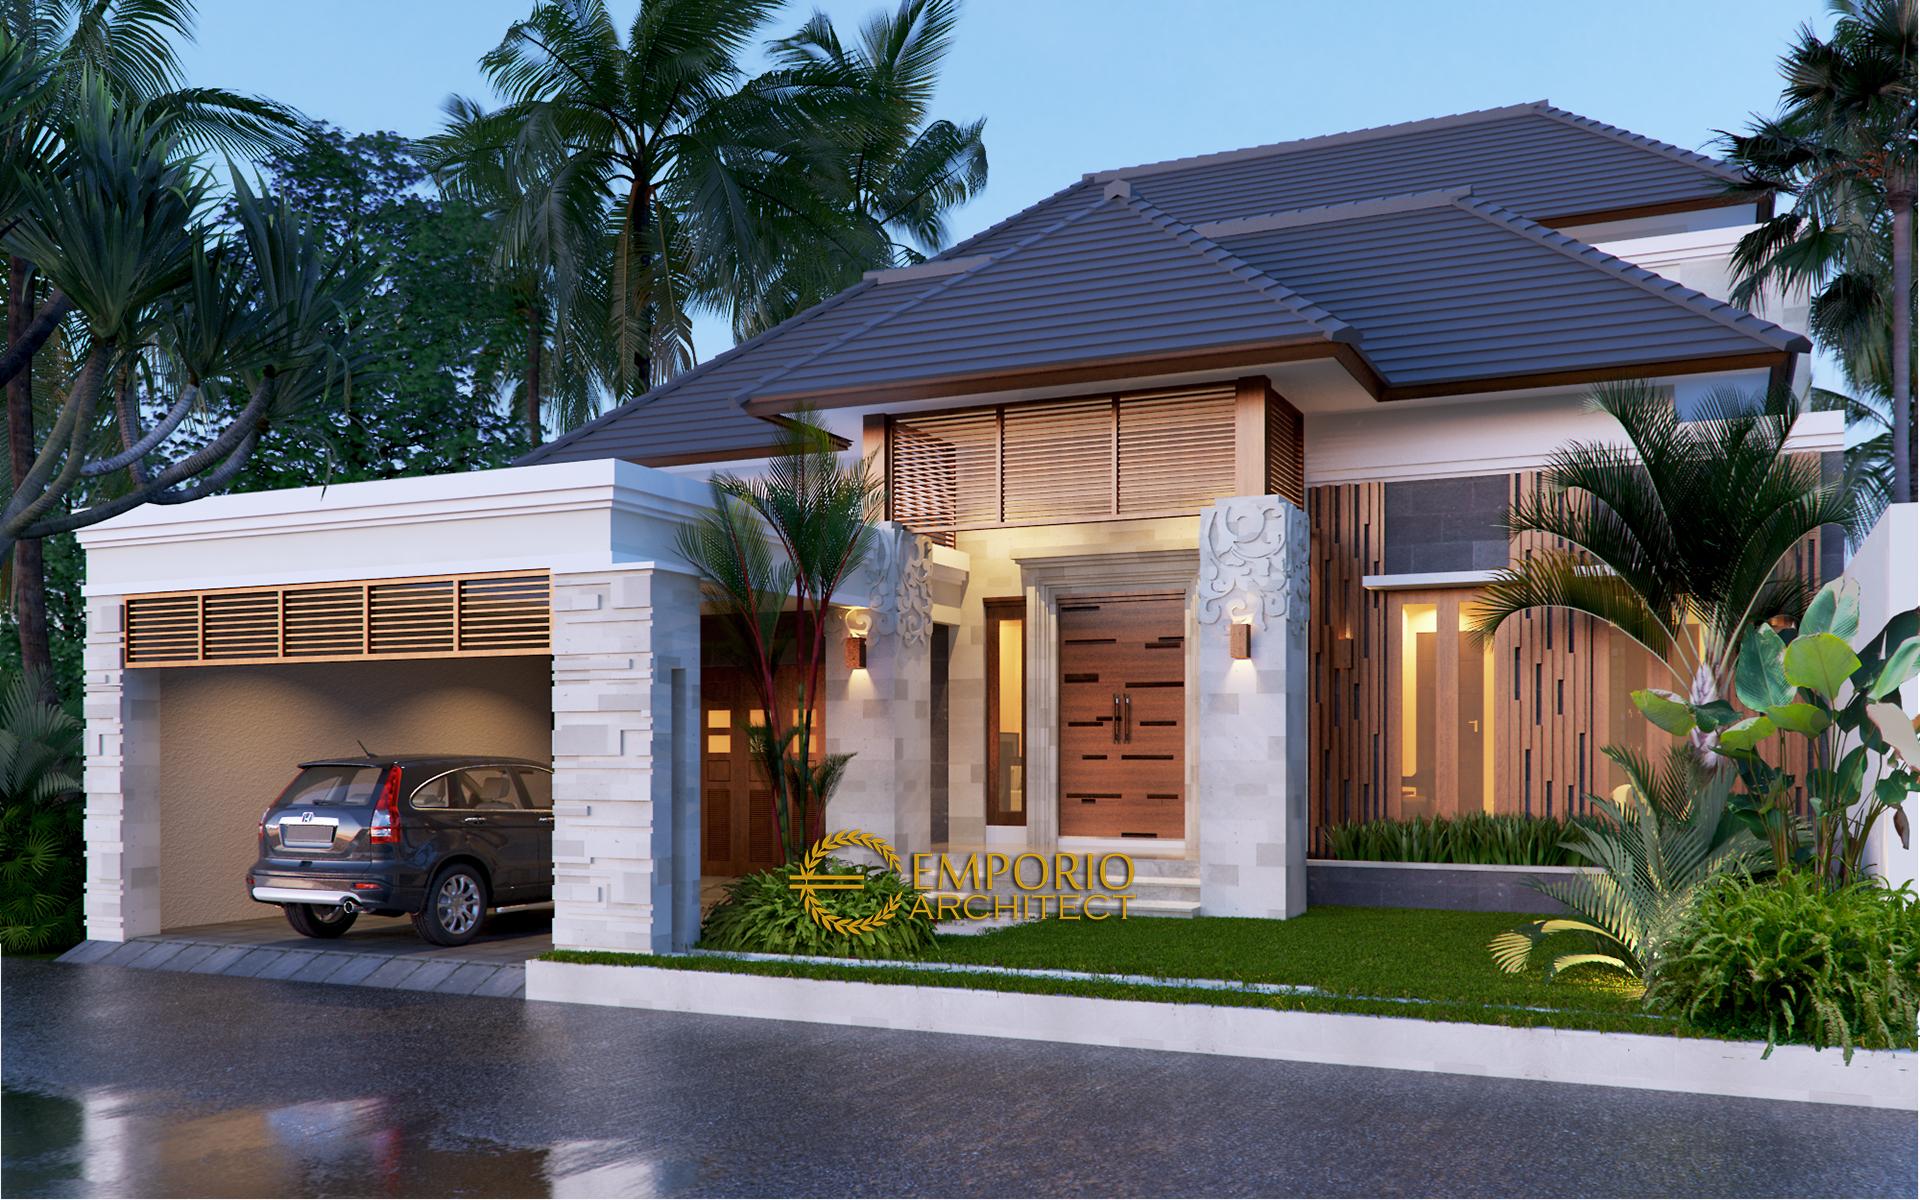 Desain Rumah Villa Bali 2 Lantai Bapak Dwi Harsono Di Jawa Tengah